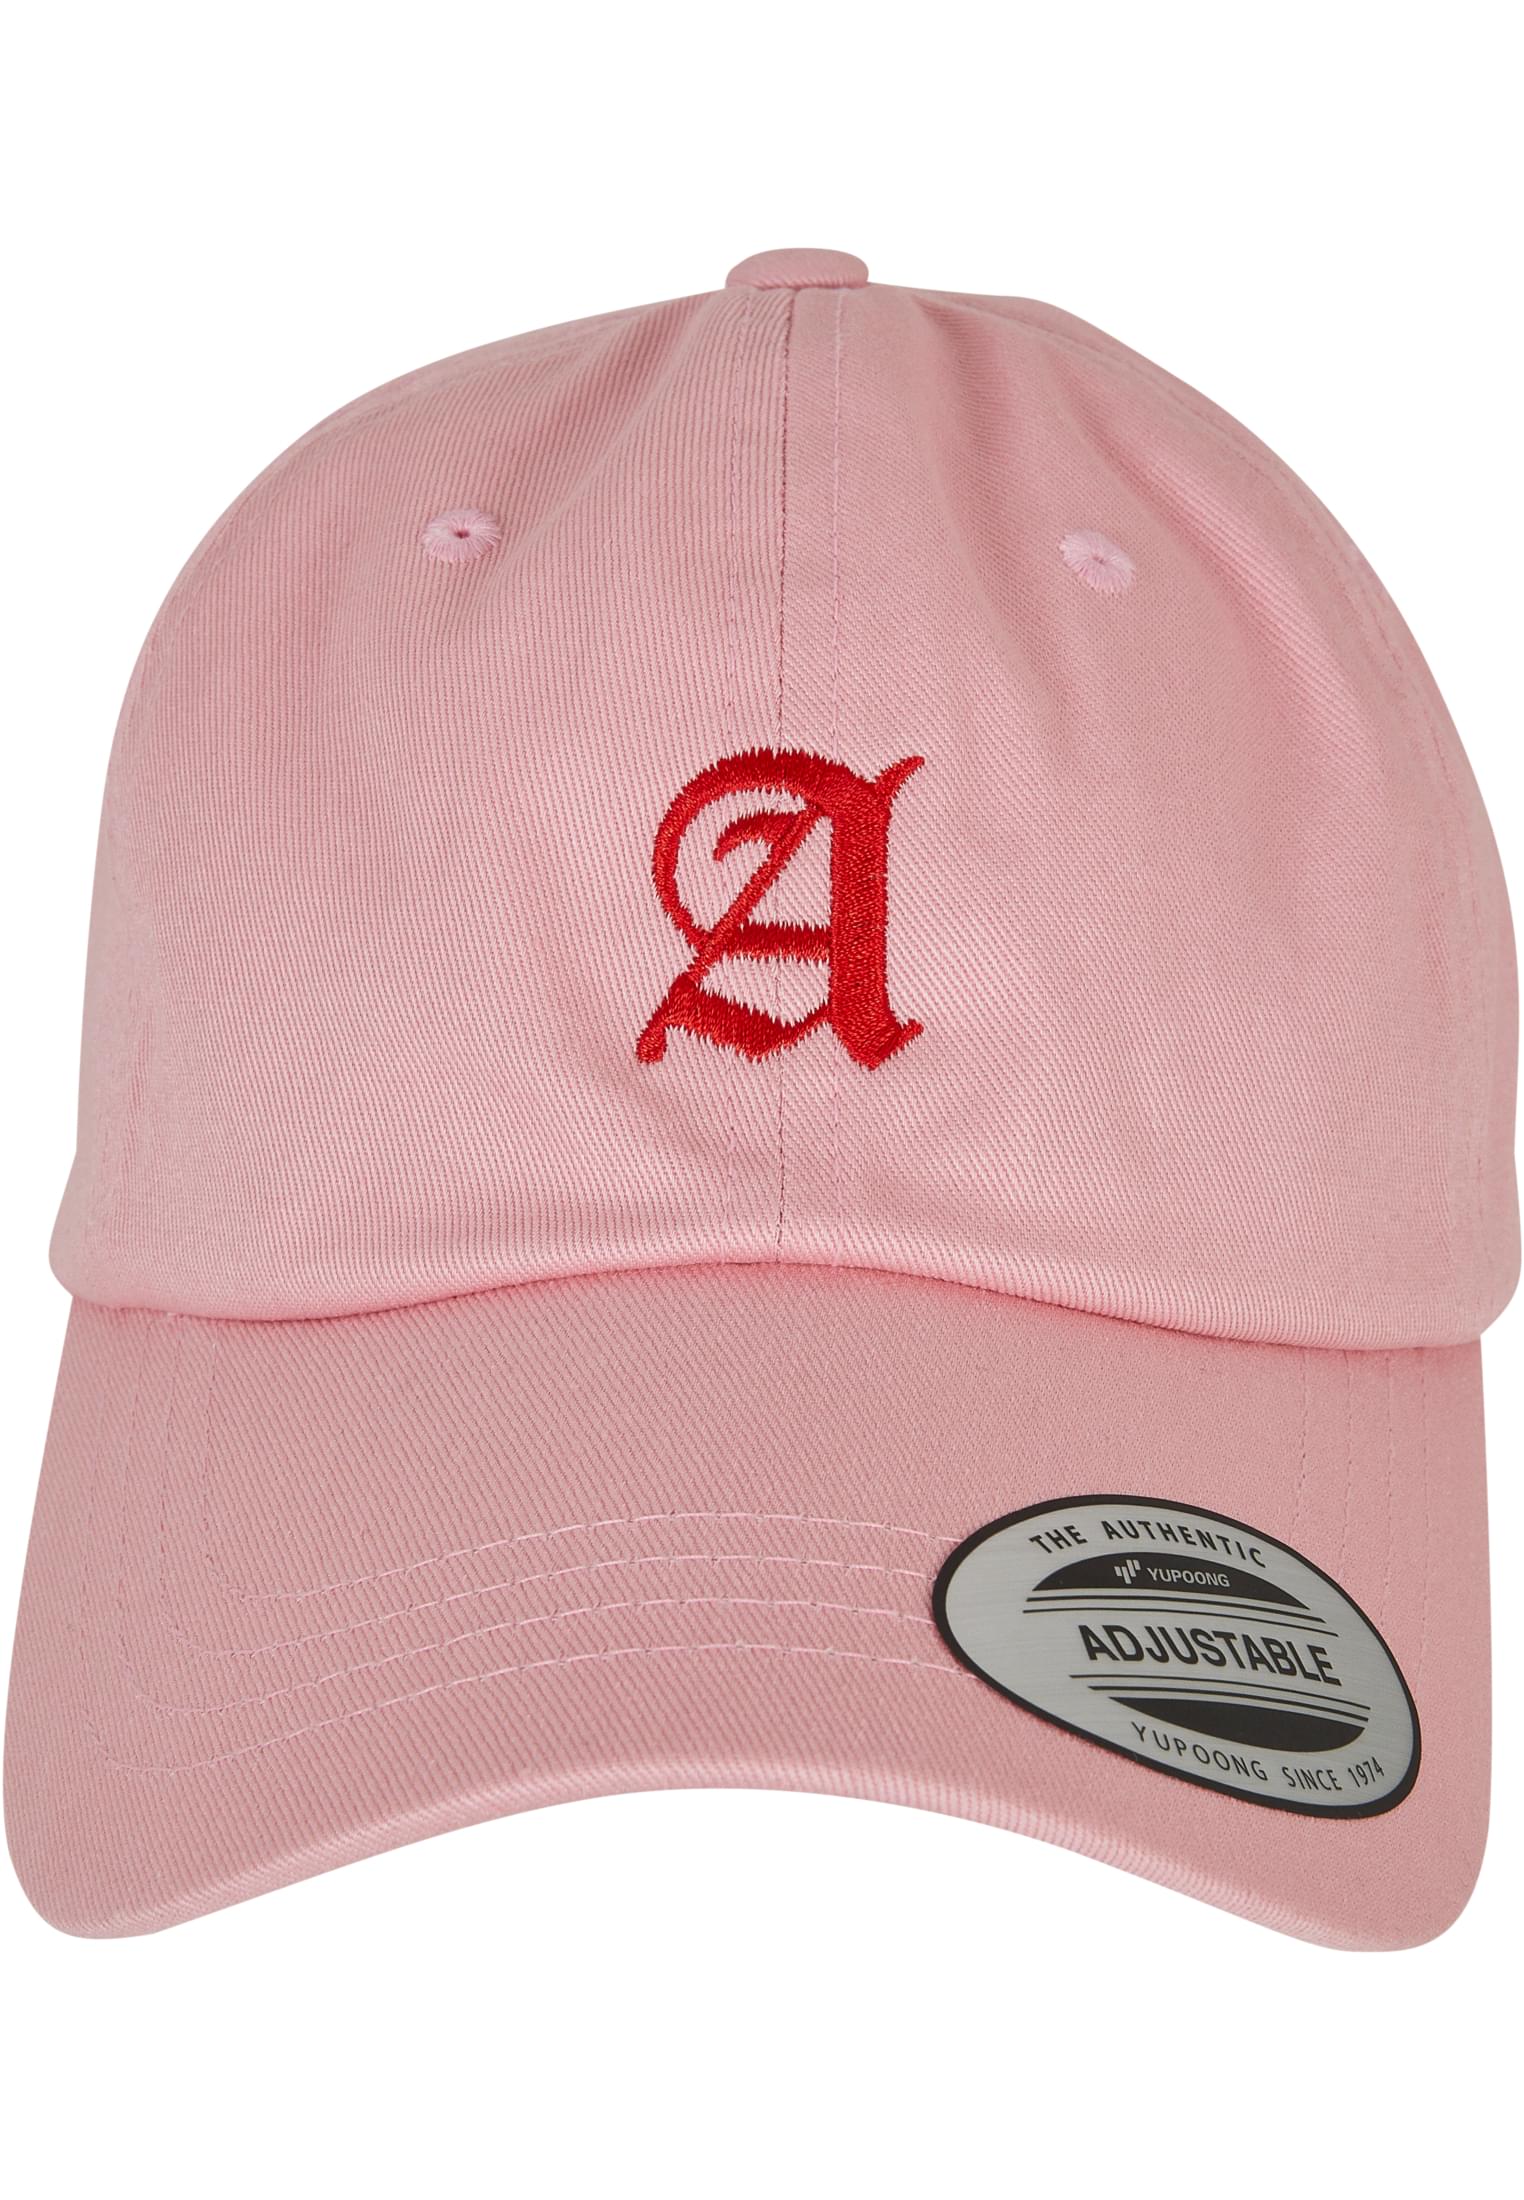 Baseball cap A - pink